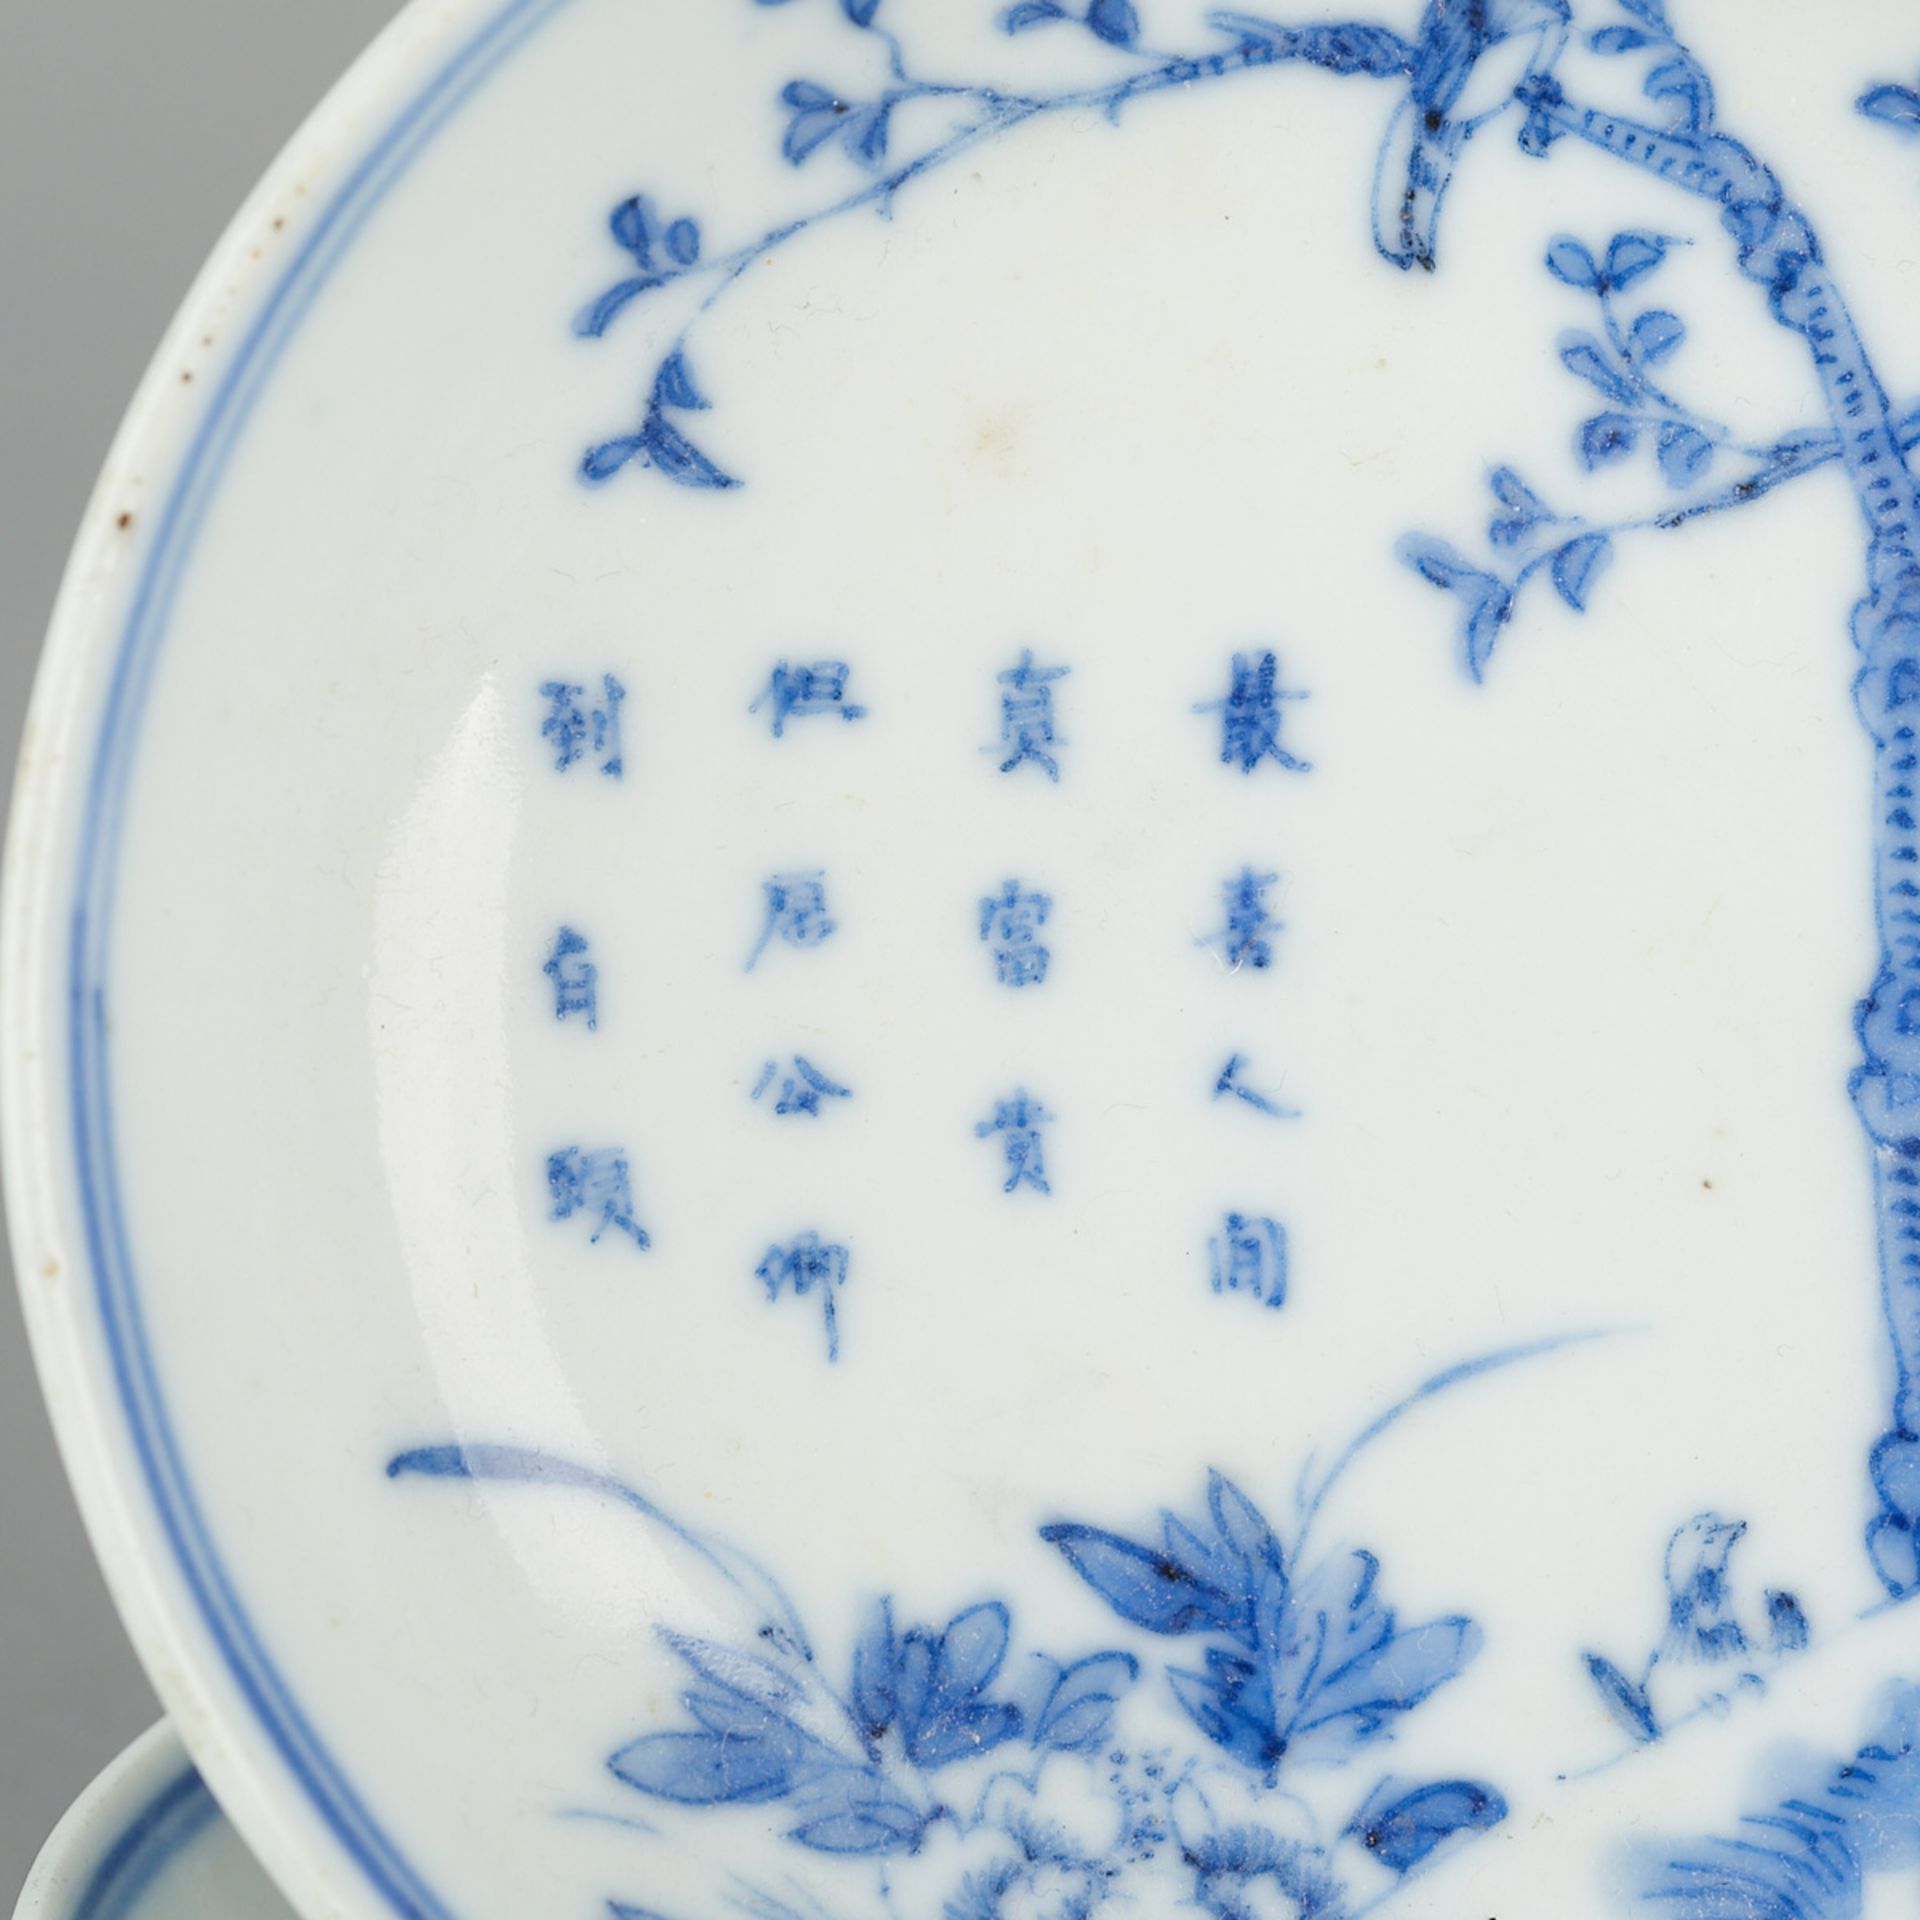 4 Bleu de Hue Chinese Porcelain Plates - Image 4 of 7